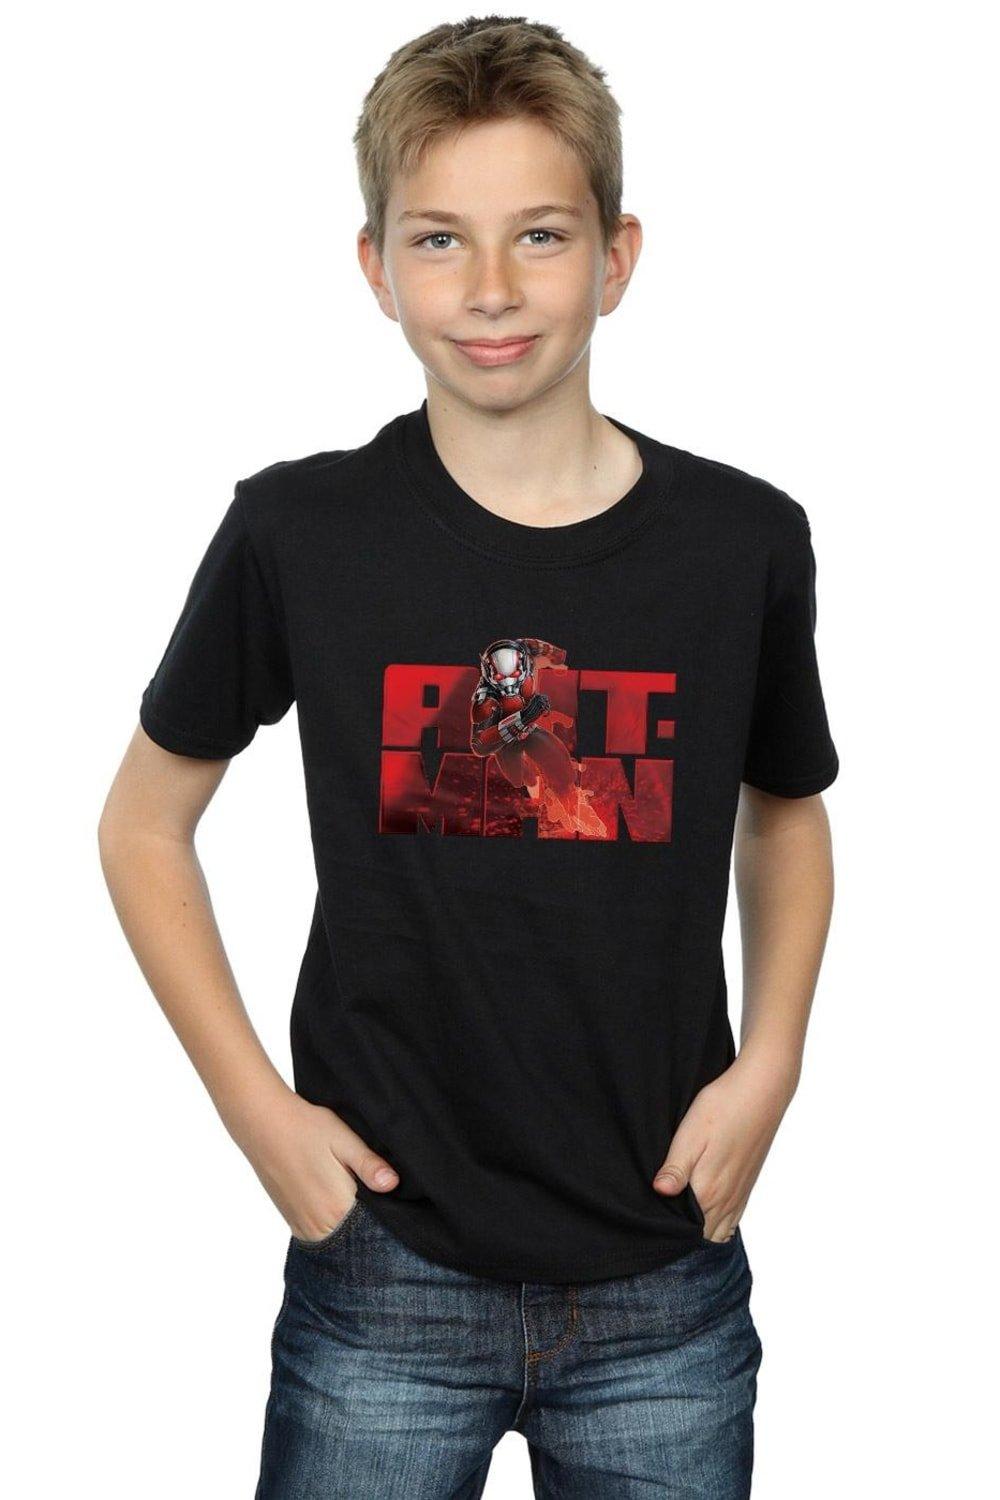 Ant-Man Running T-Shirt